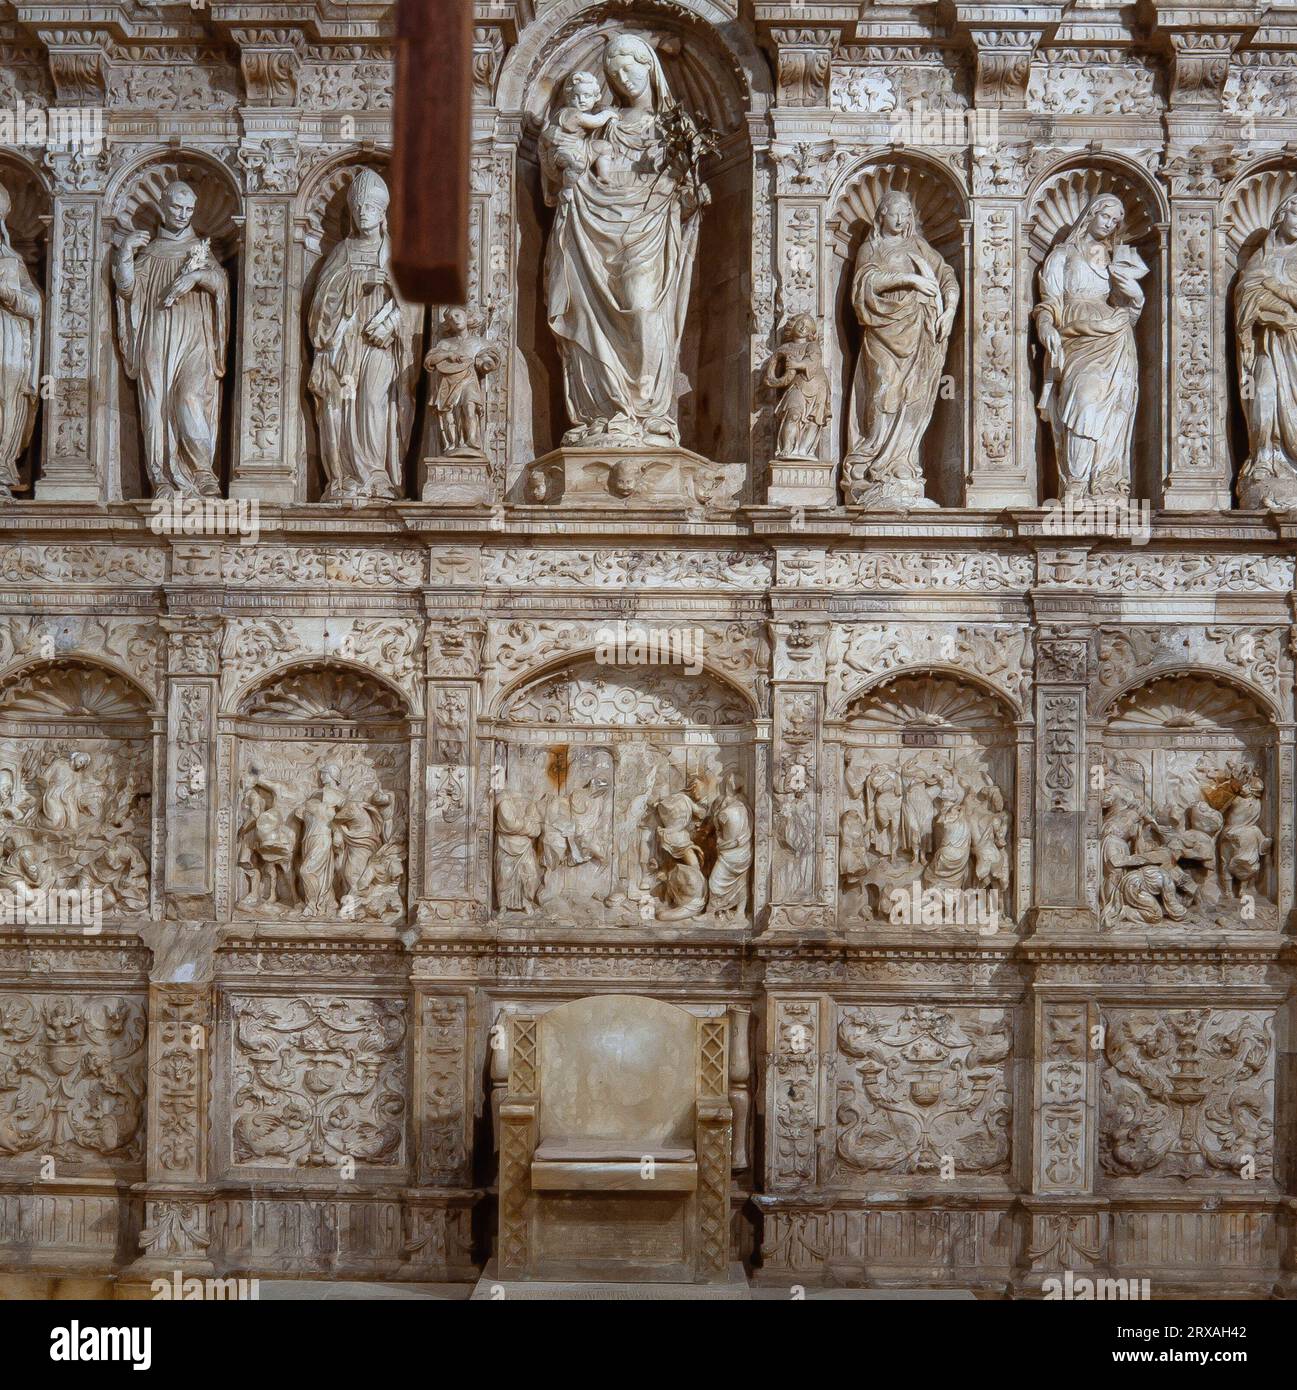 Damià Forment / Retablo Mayor, 1529, alabastro, Monasterio de Poblet. Auteur : DAMIA FOMENT. Banque D'Images